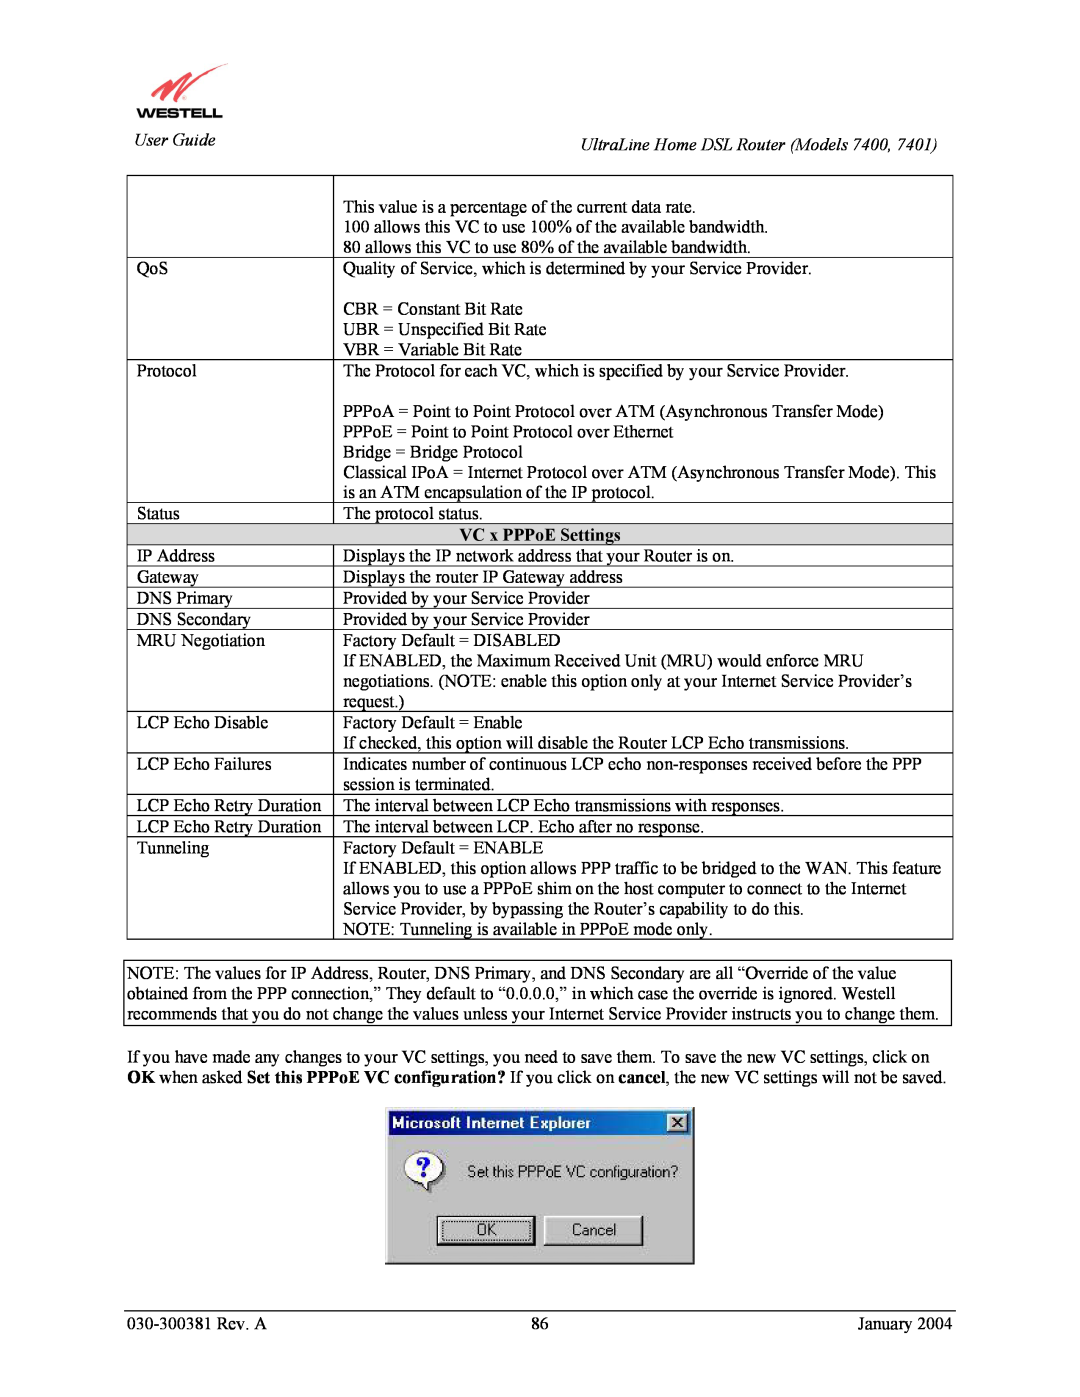 Westell Technologies 7401, 7400 manual VC x PPPoE Settings, 030-300381 Rev. A, January 